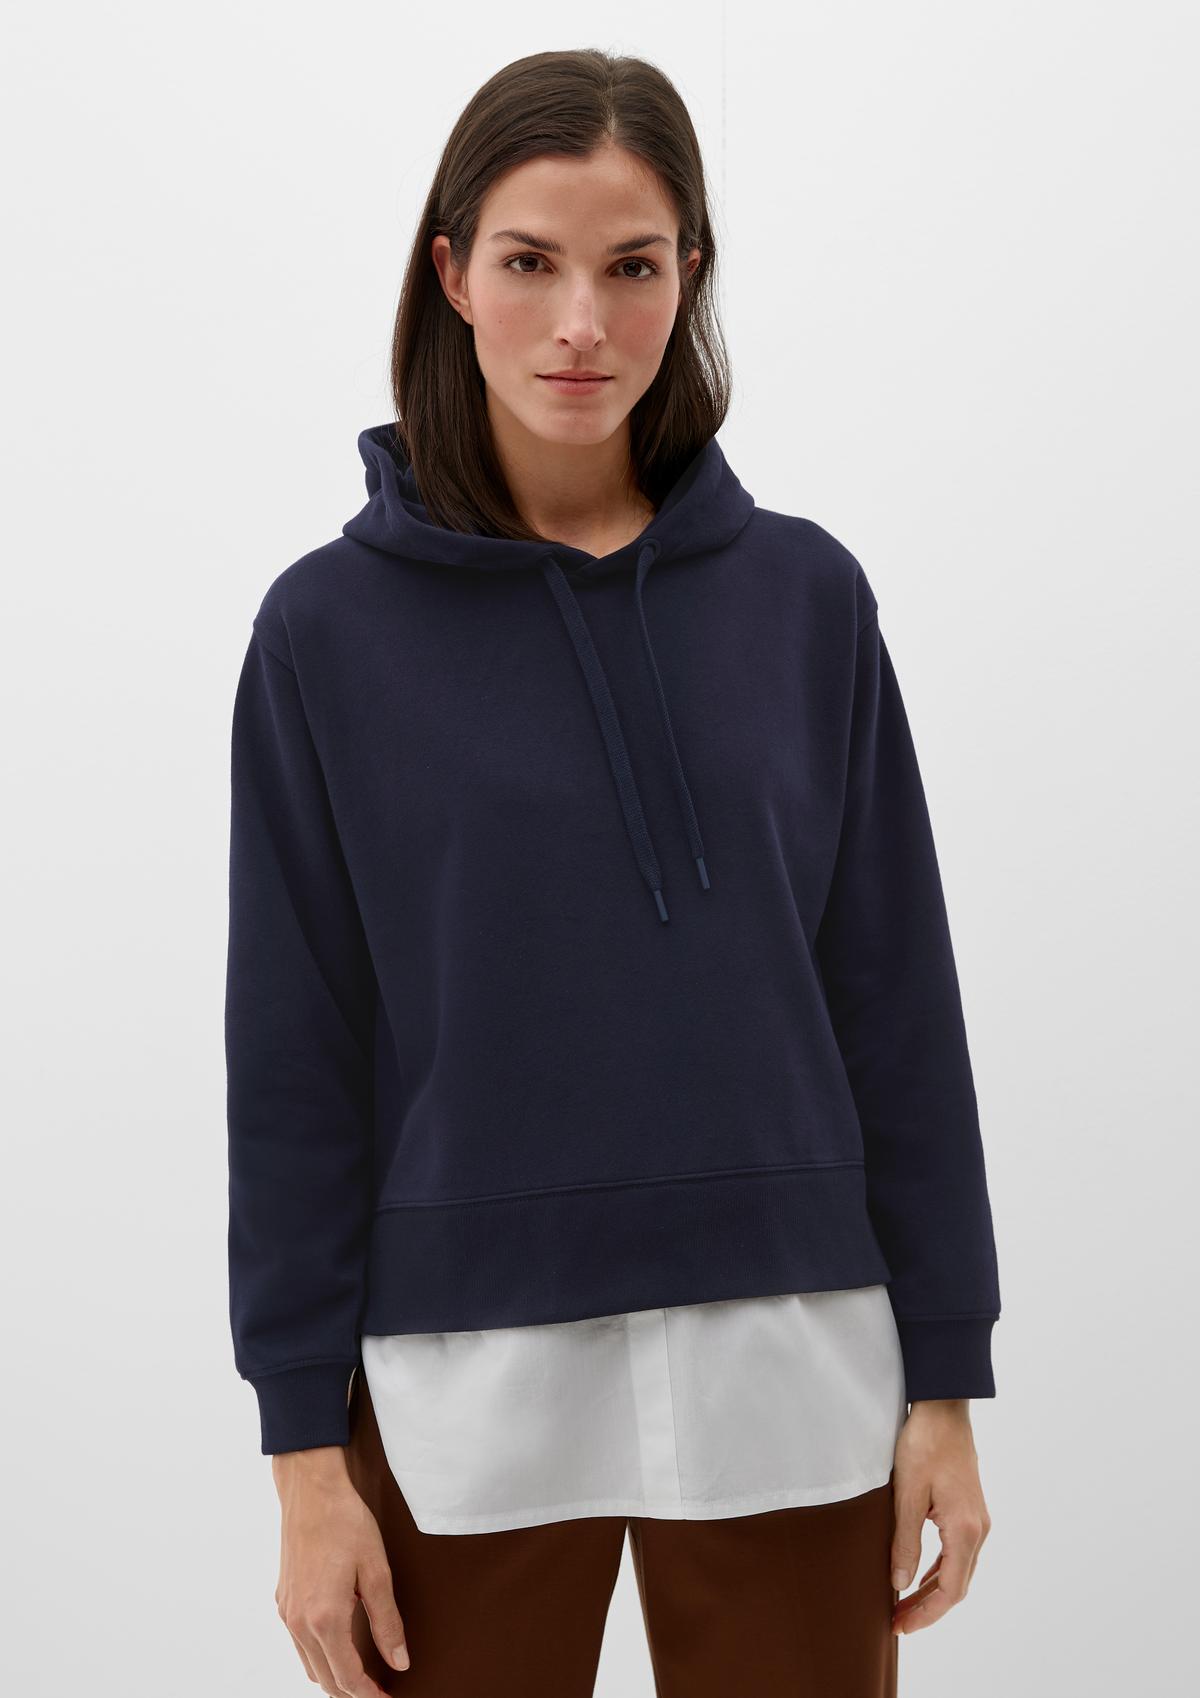 layered navy Sweatshirt in - a look